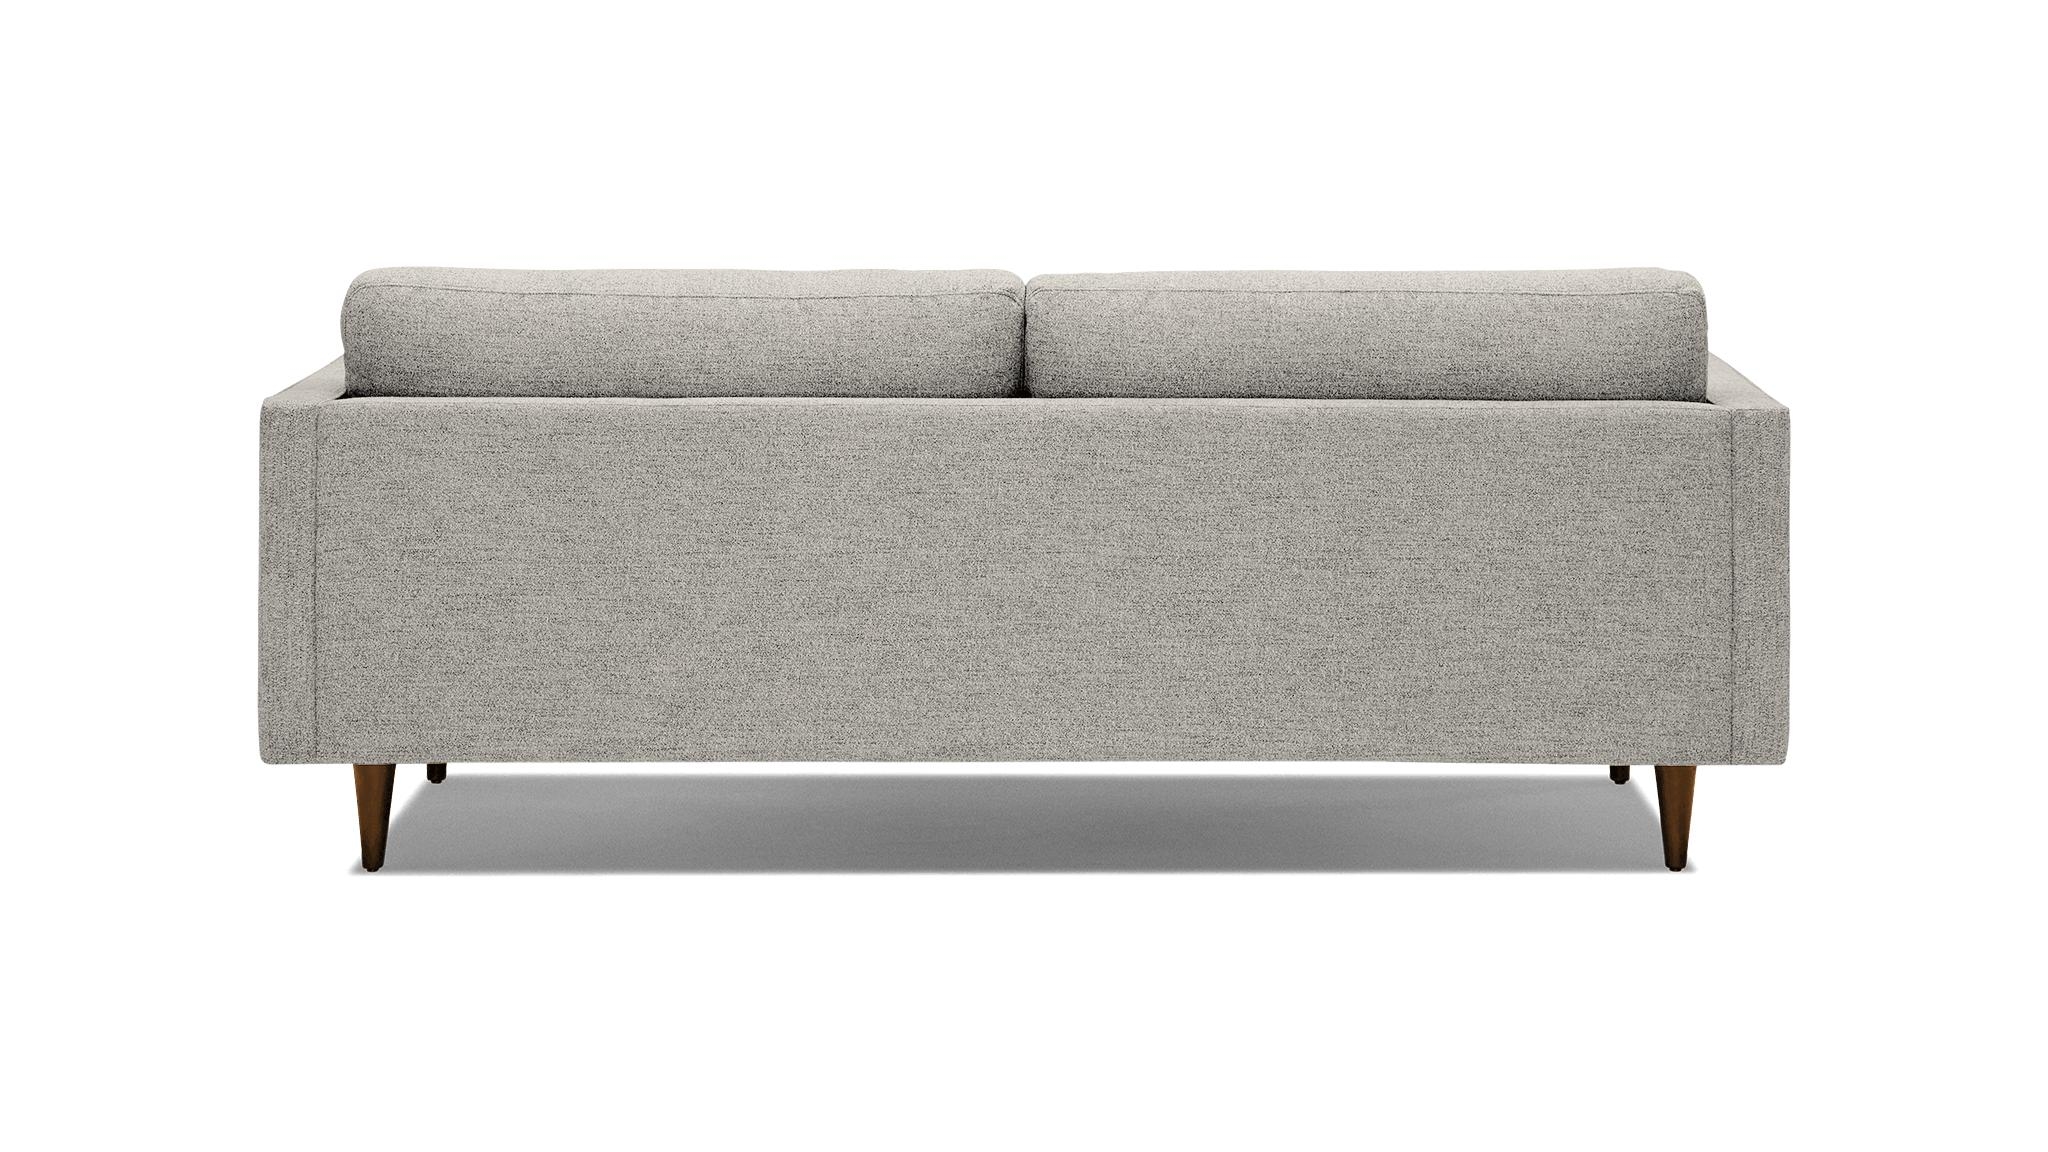 White Briar Mid Century Modern Sofa - Bloke Cotton - Mocha - Image 4